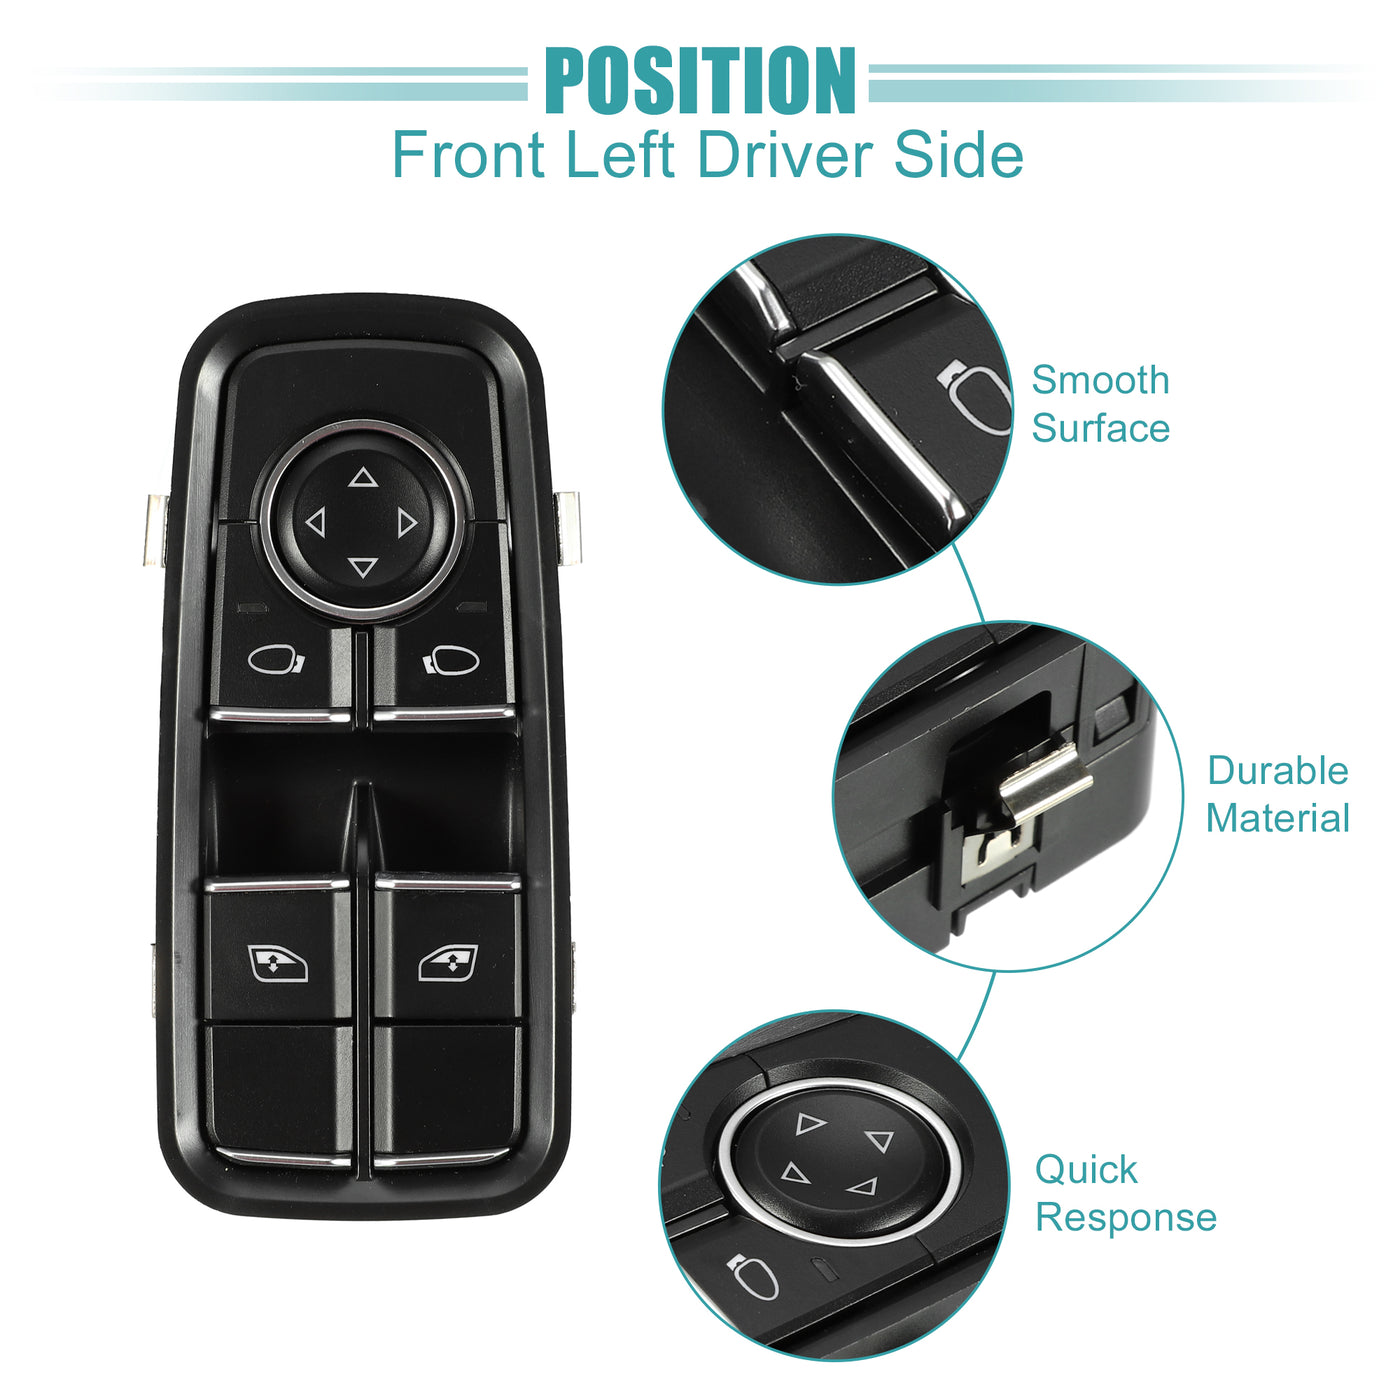 ACROPIX Power Window Switch Window Control Switch Fit for Porsche 718 Spyder 2020-2023 No.99161315102DML - Pack of 1